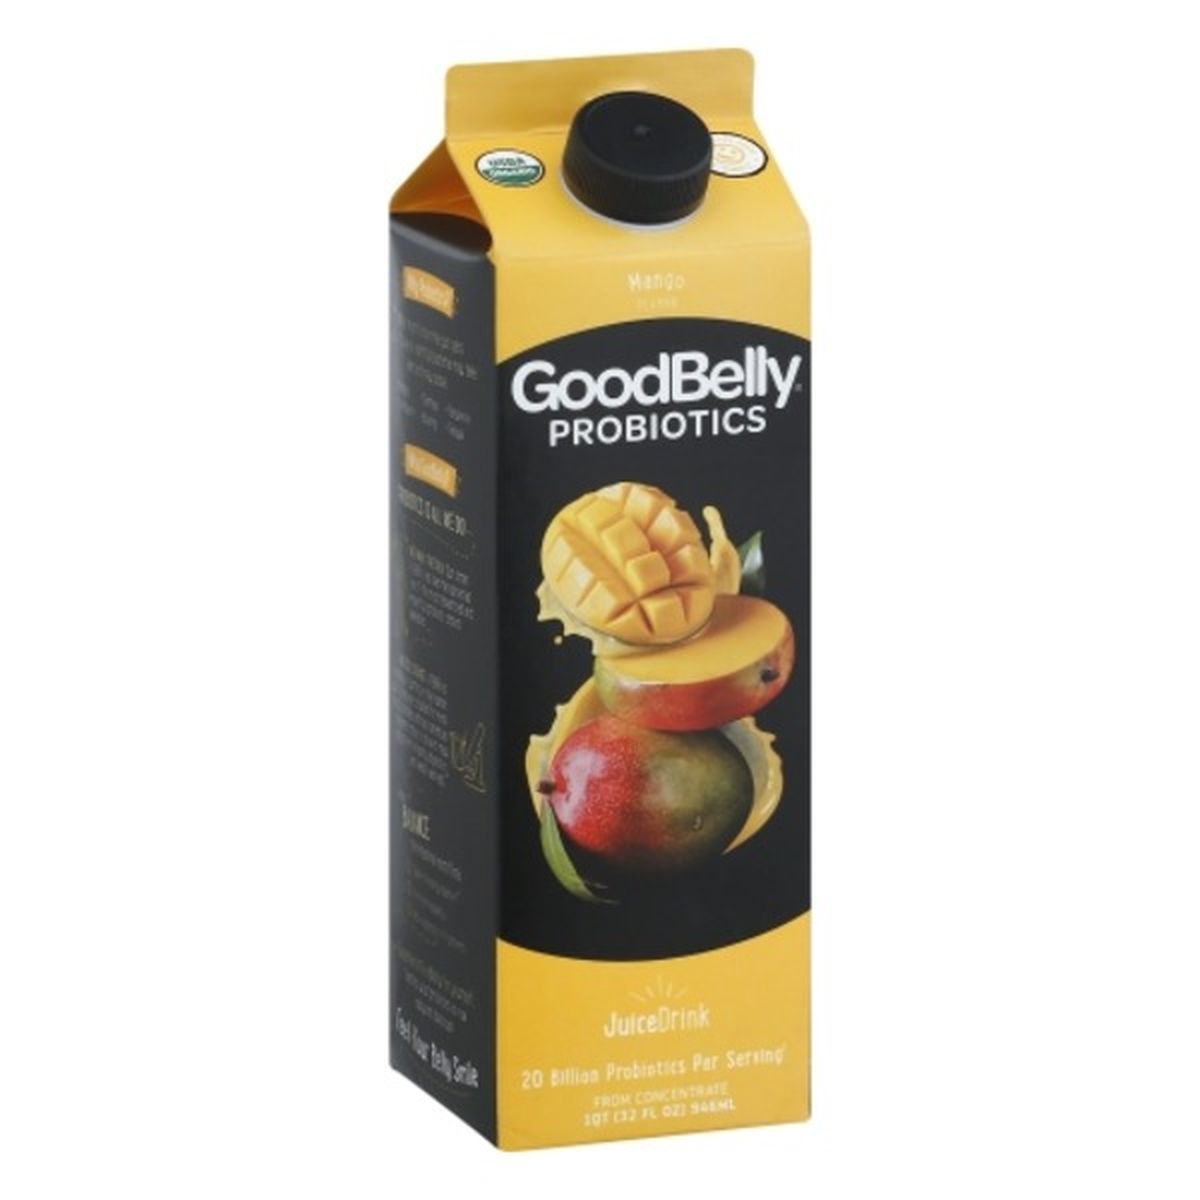 Calories in GoodBelly Juice Drink, Mango Flavor